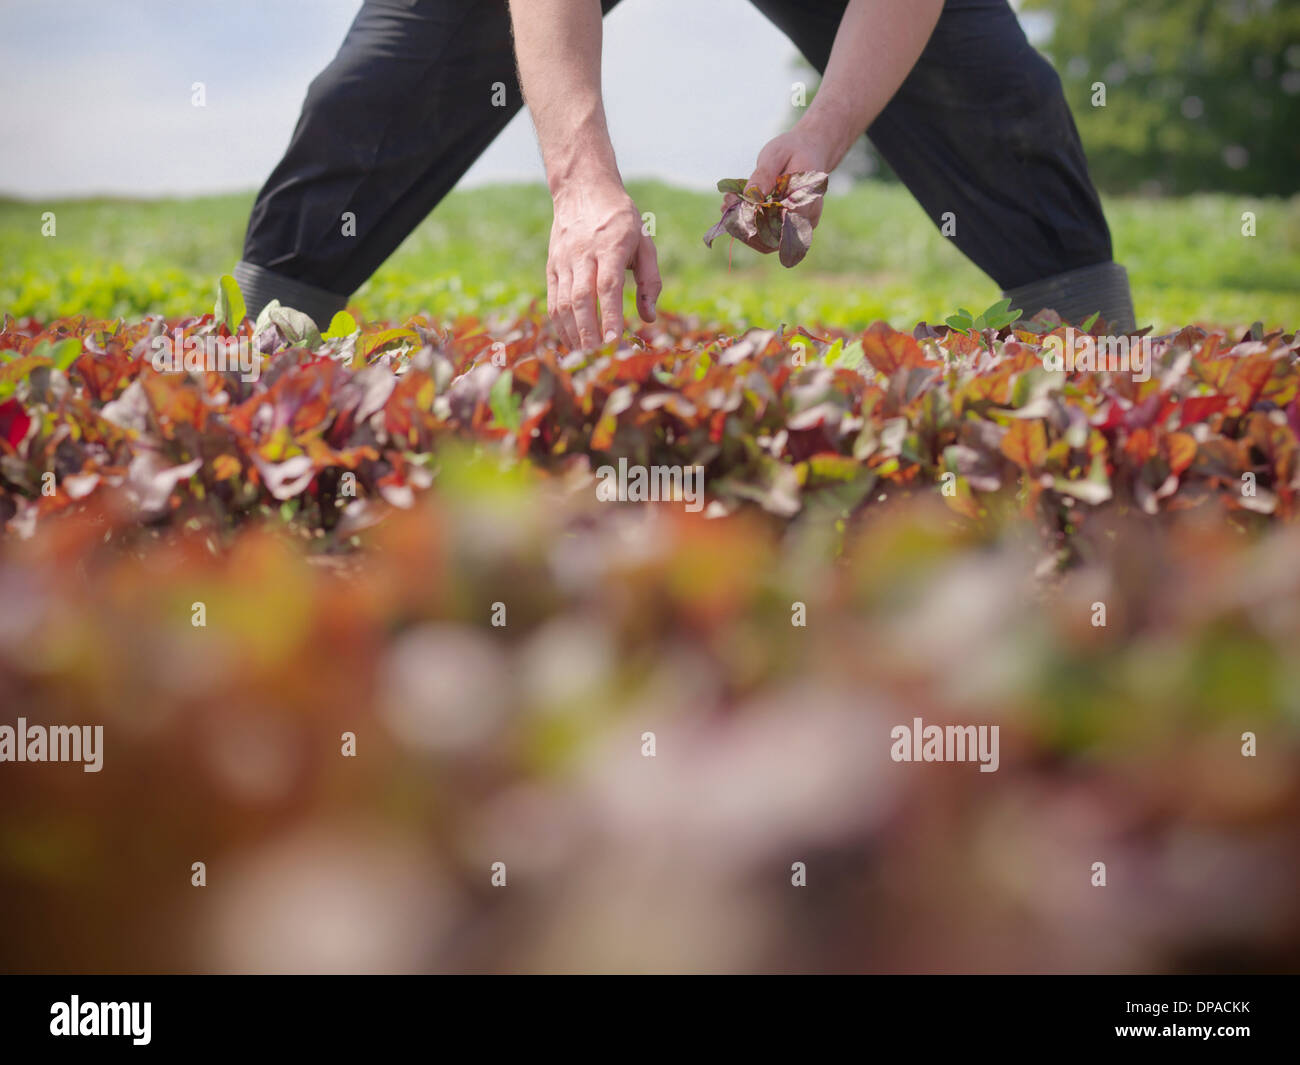 Worker picking salad crop Stock Photo